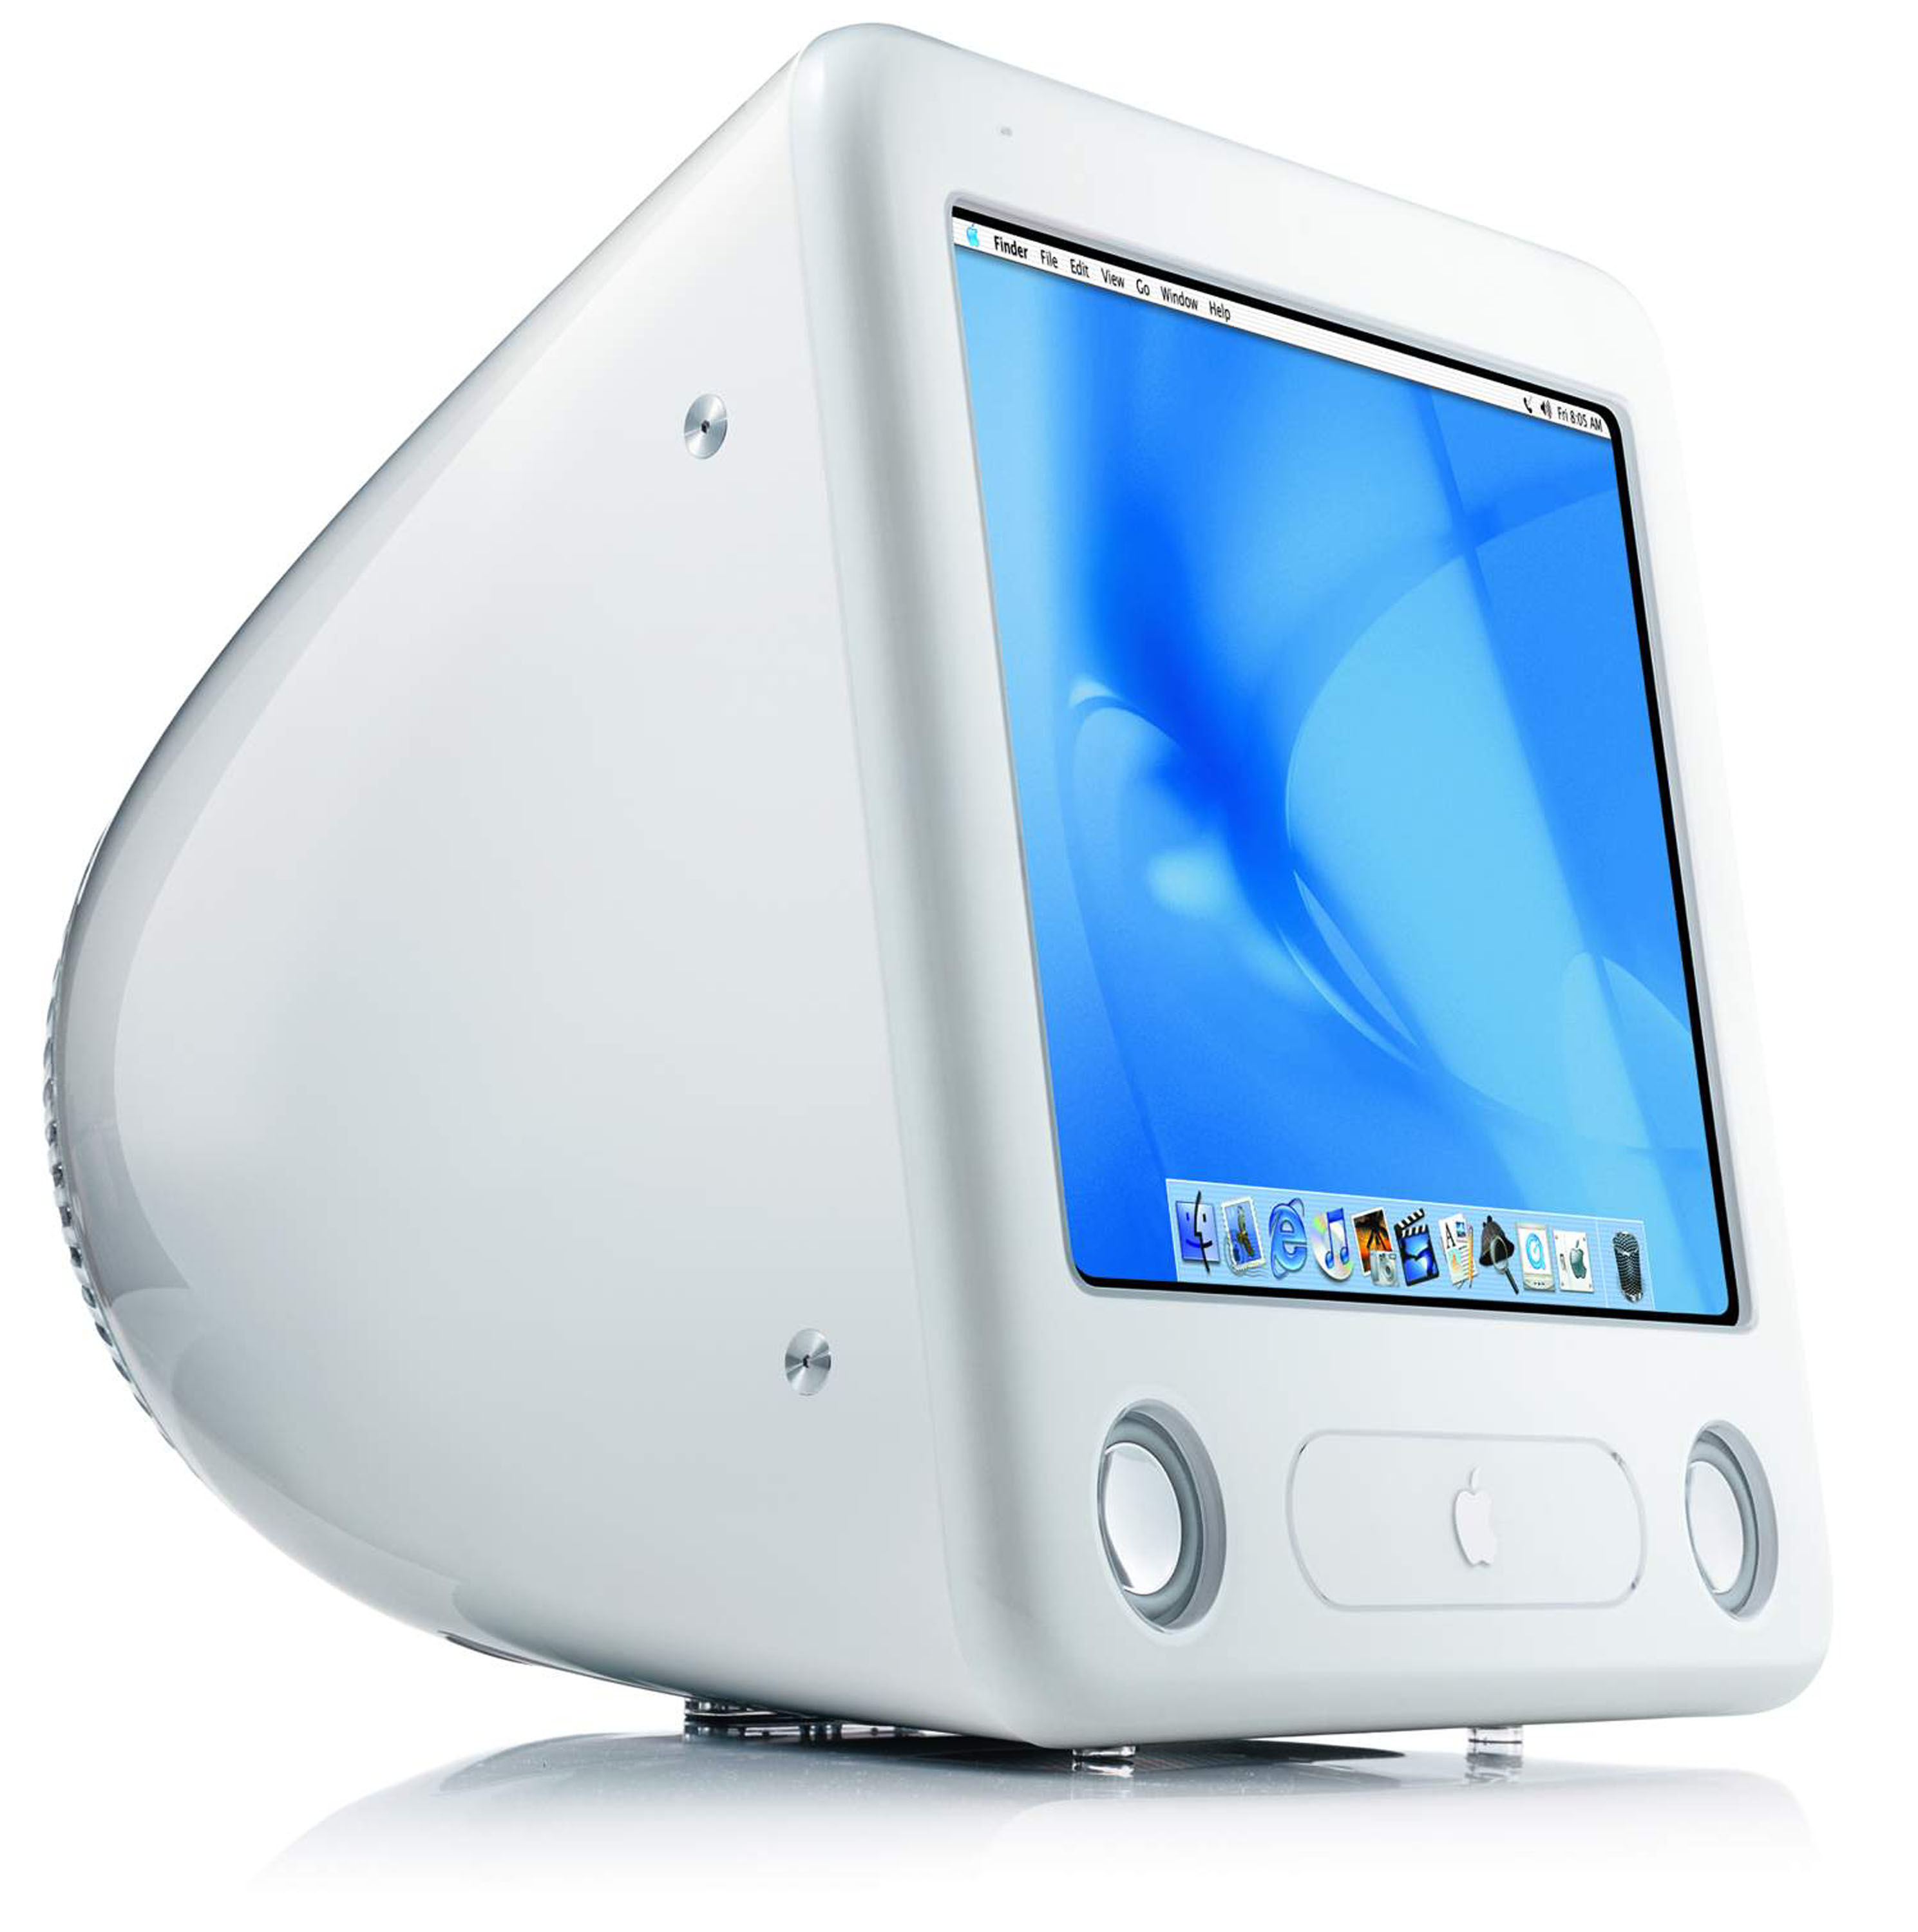 White iMac desktop